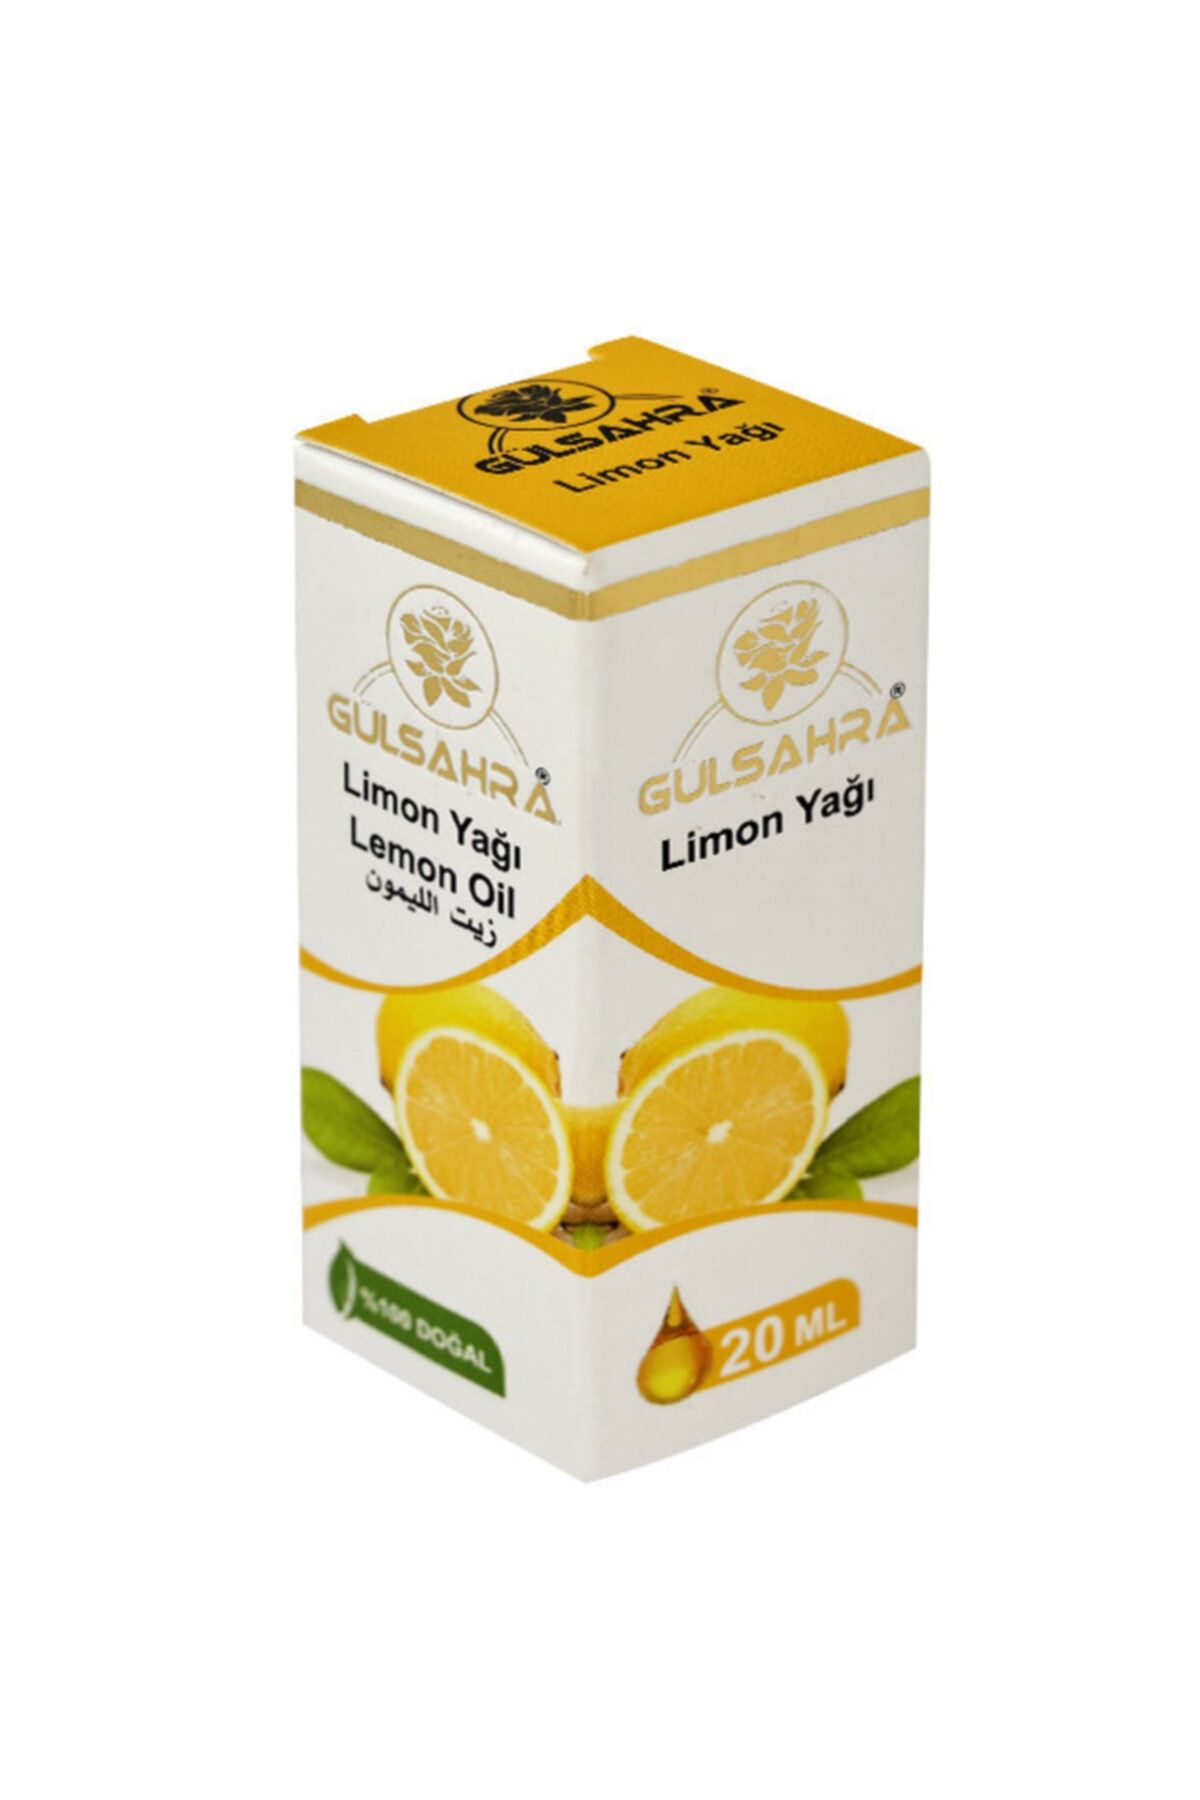 GÜLSAHRA Limon Yağı 20cc 3 Adet